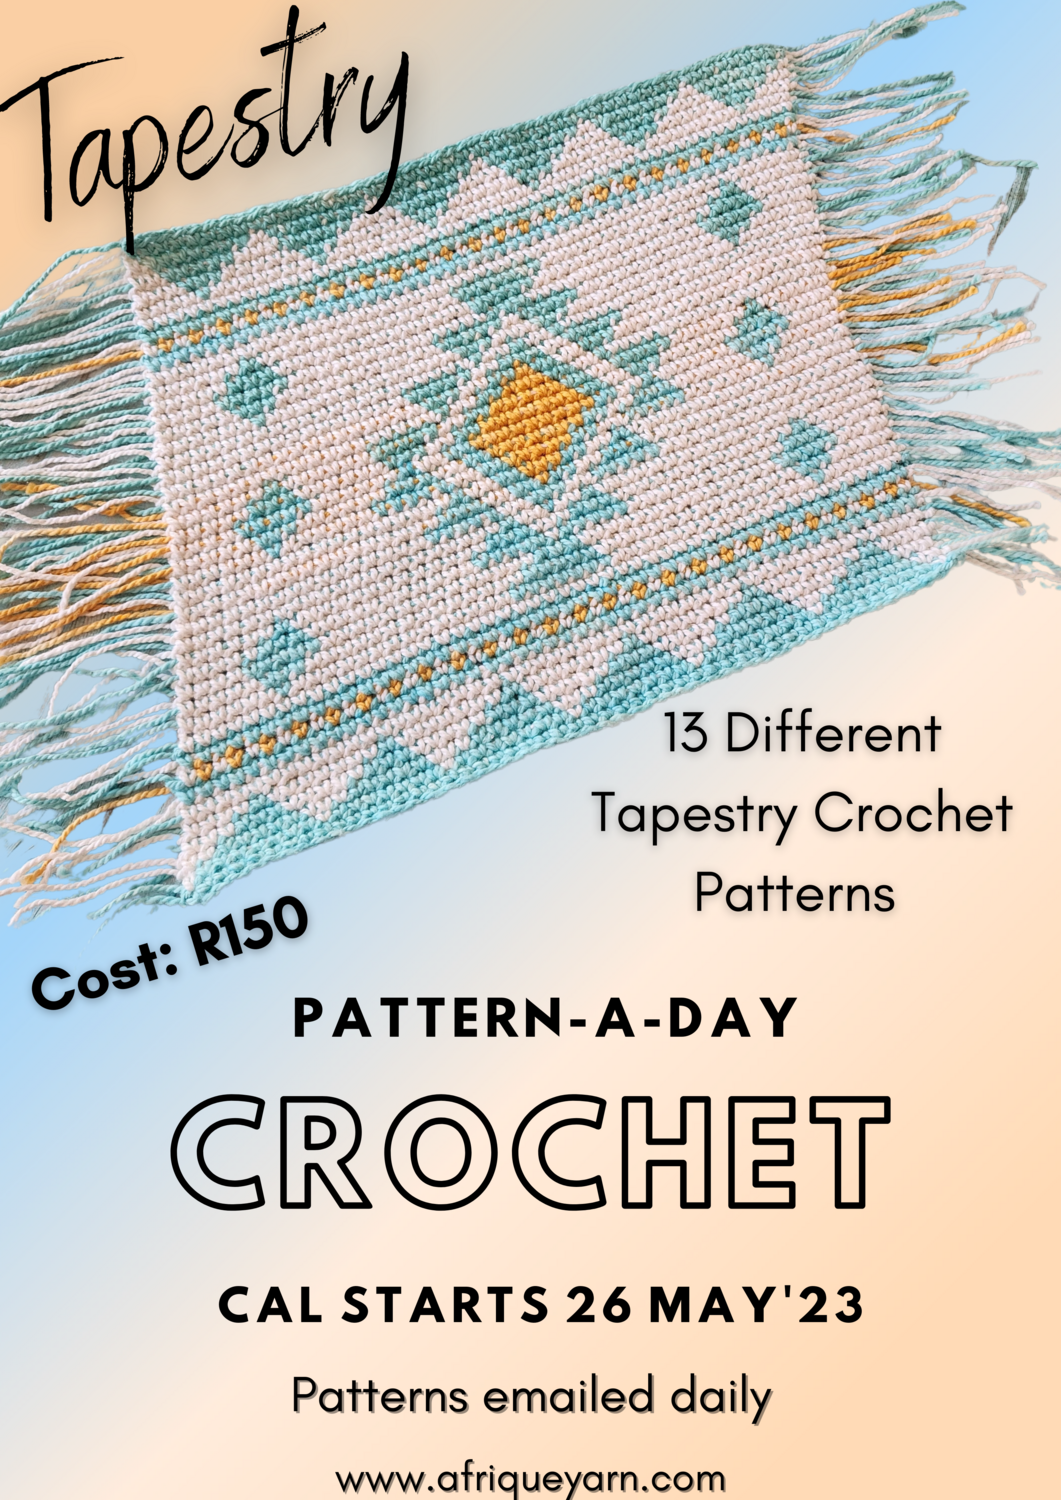 Tapestry Pattern-A-Day Crochet